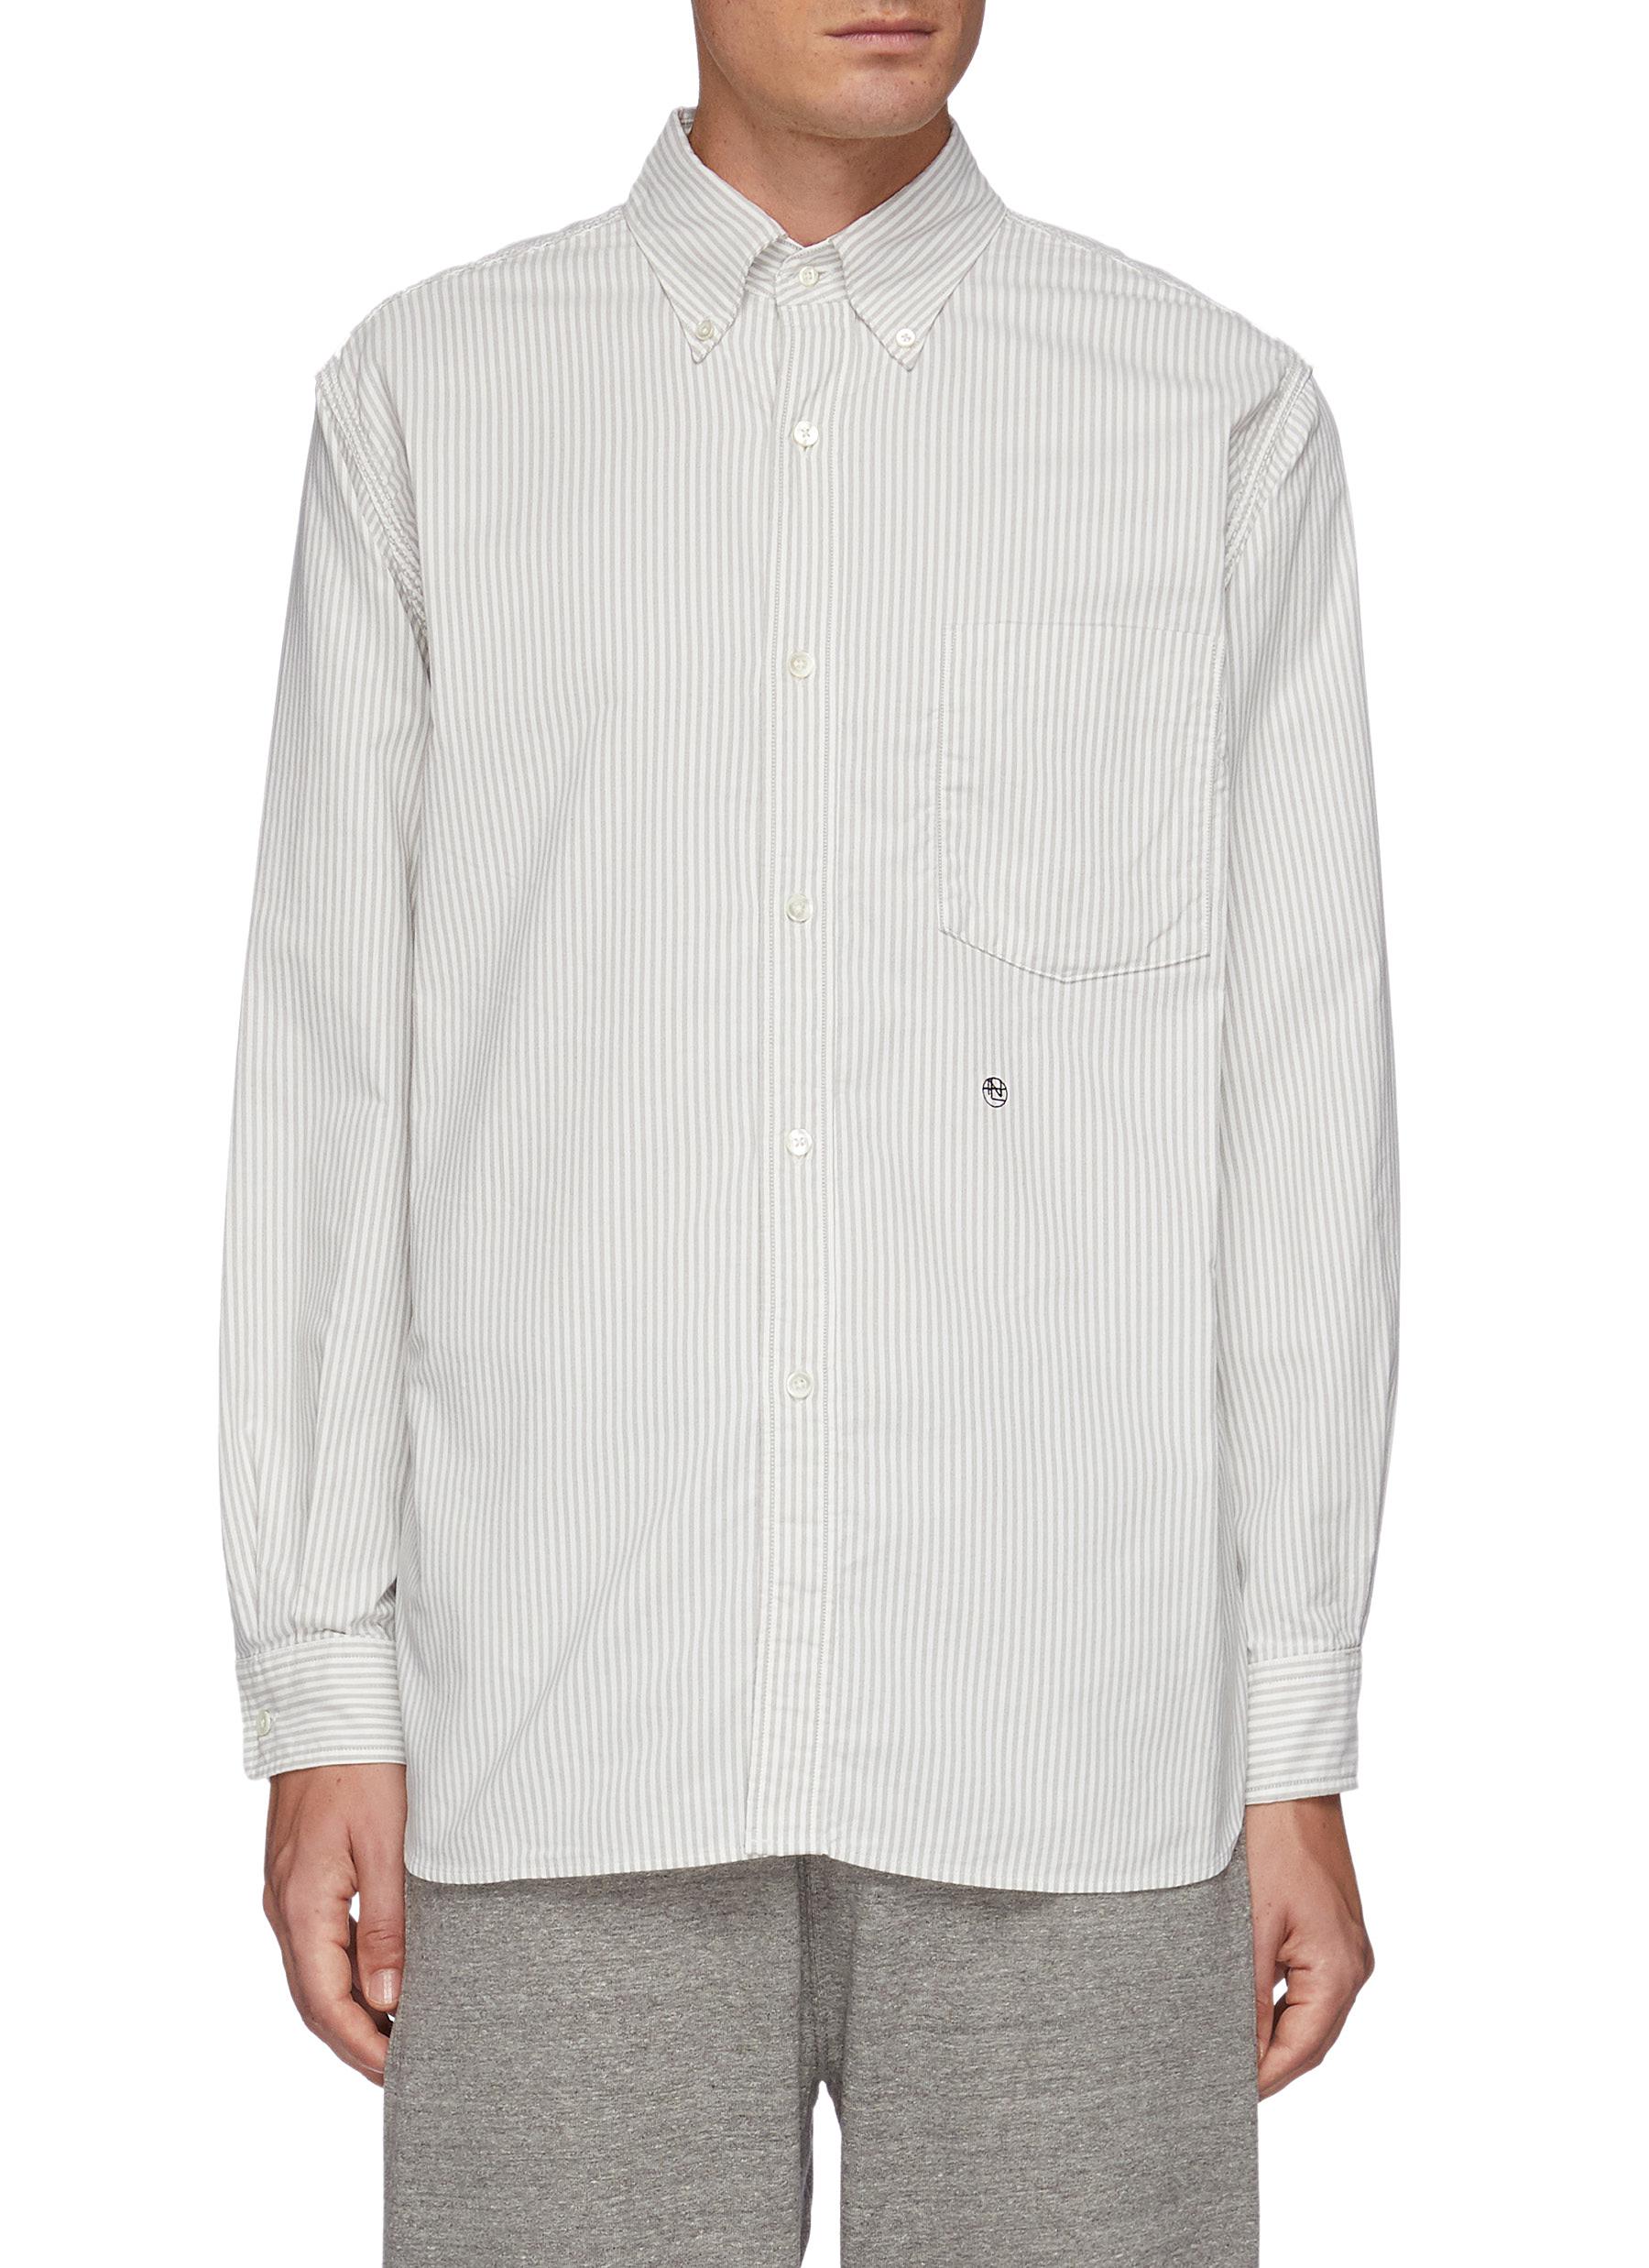 Insignia Appliqued Striped Cotton Blend Wind Shirt